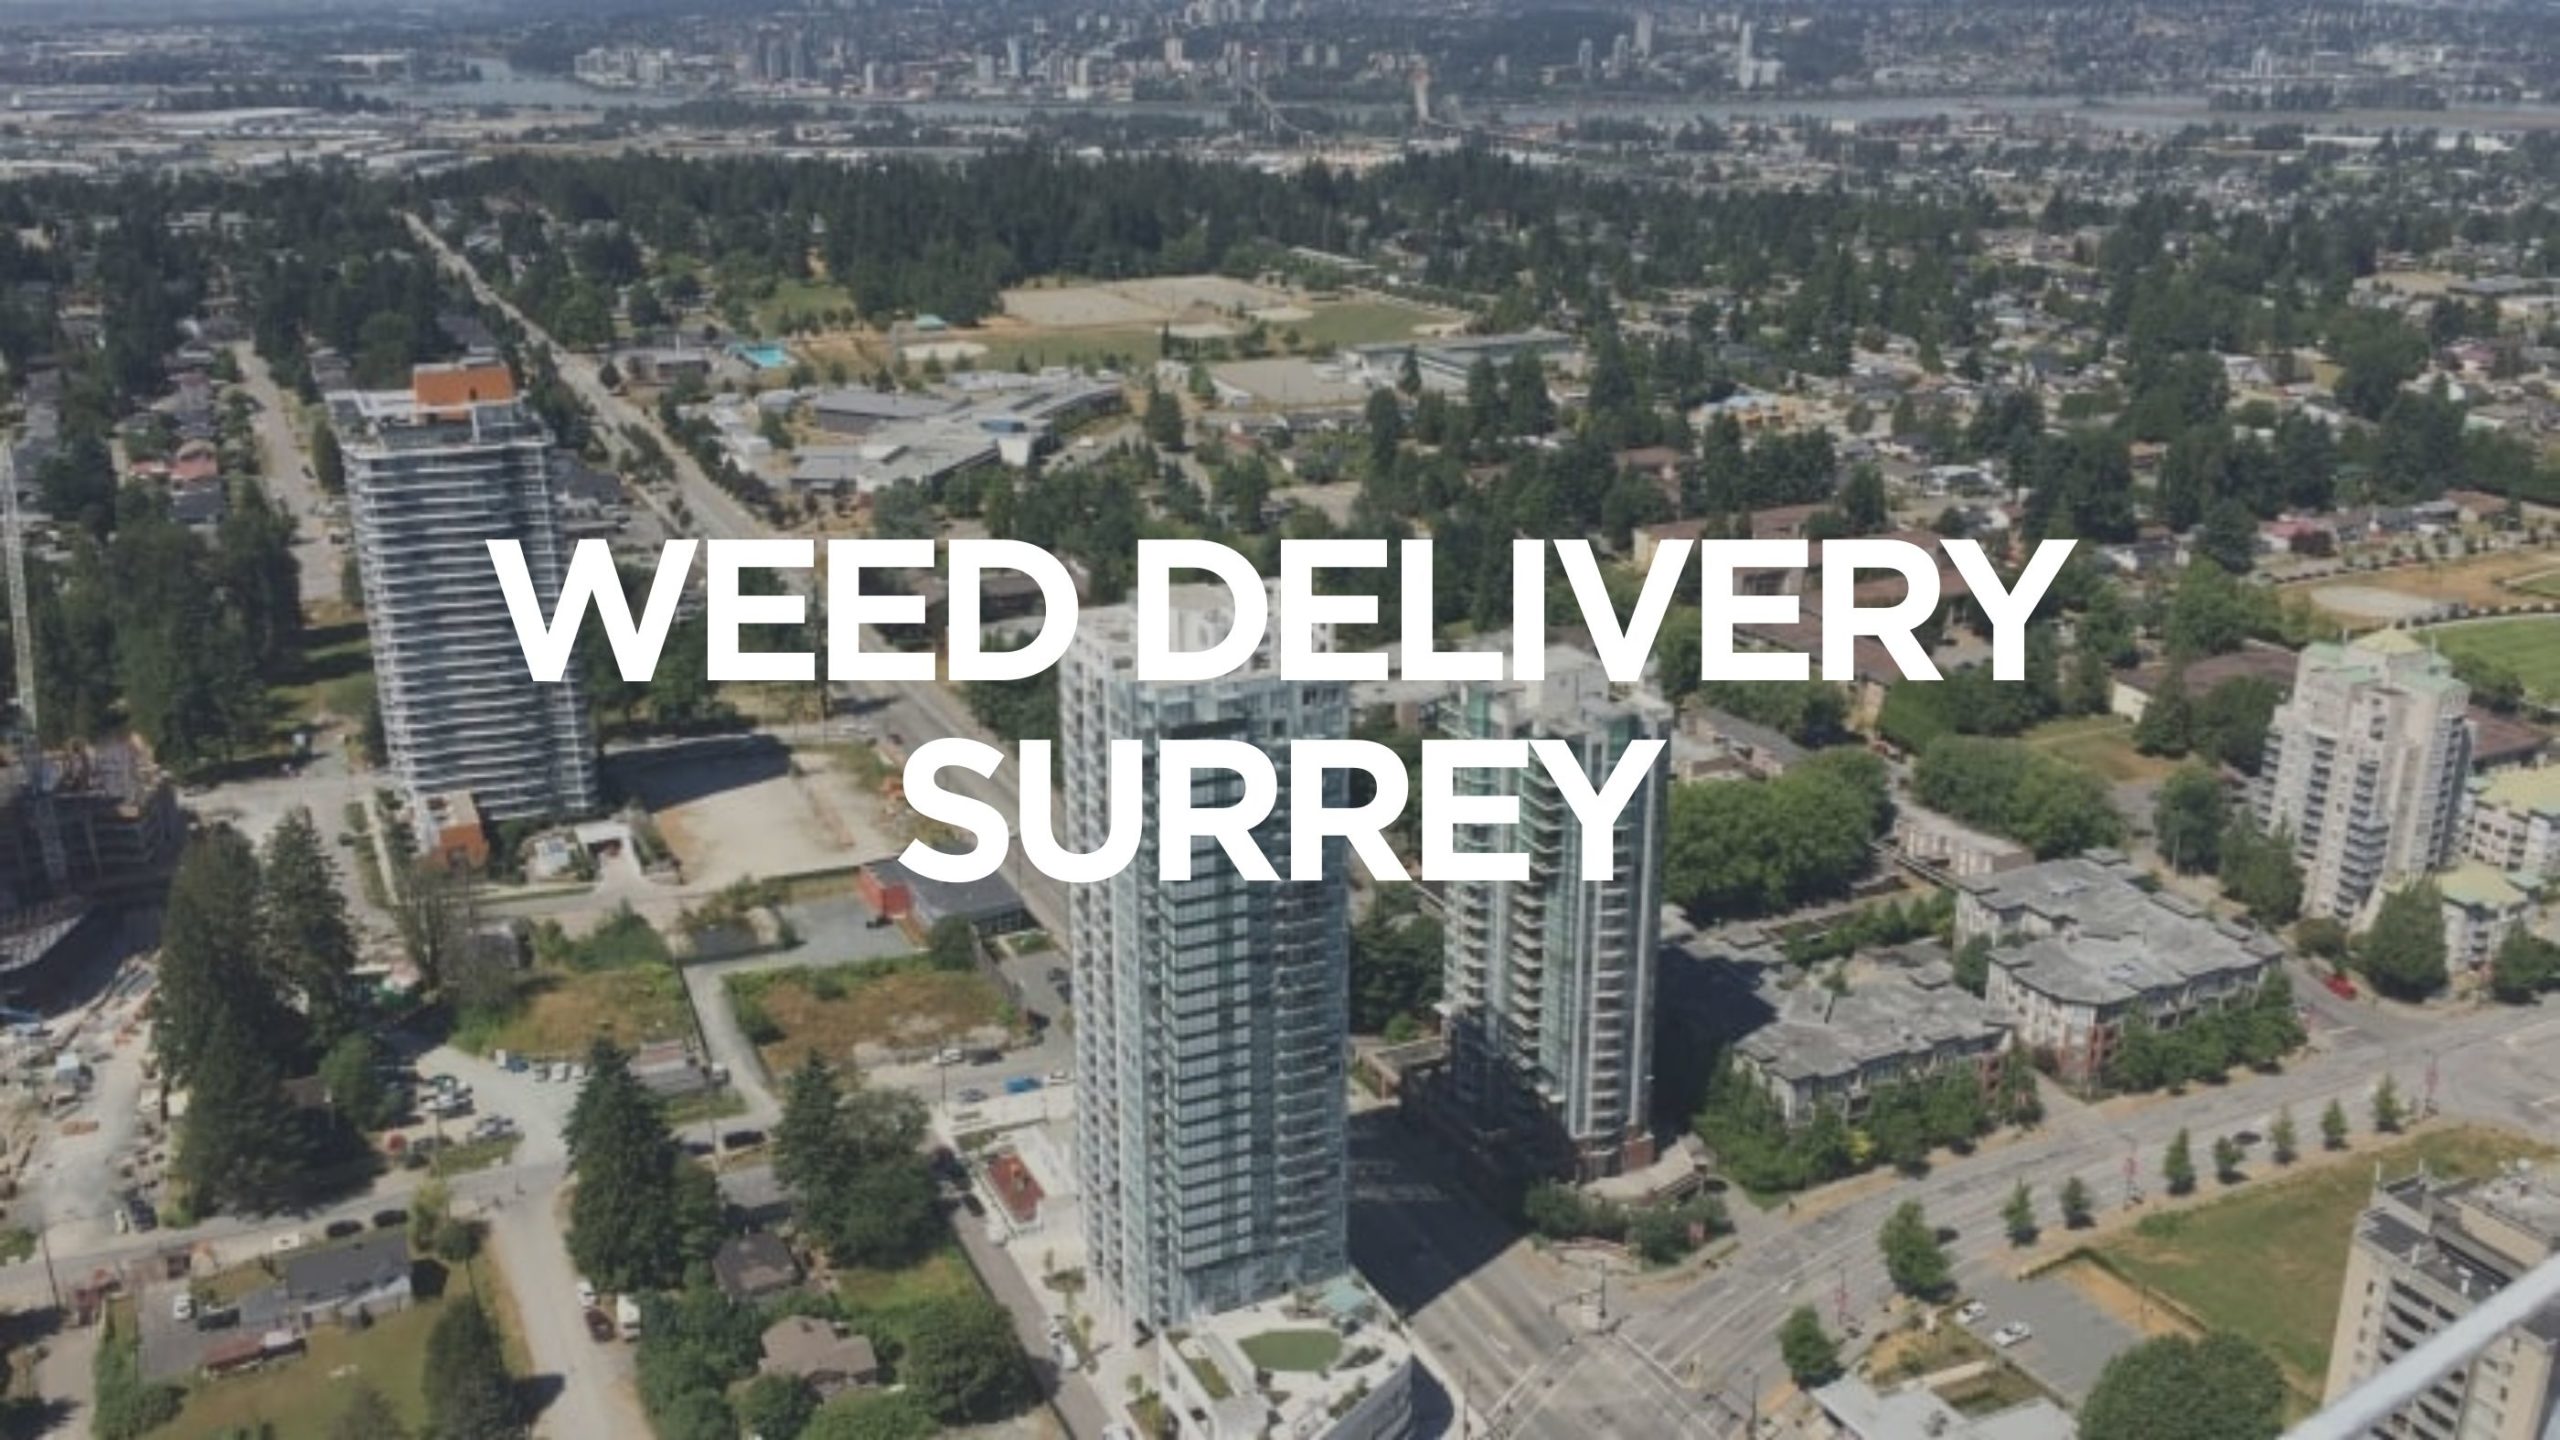 Weed Delivery Surrey vancouver